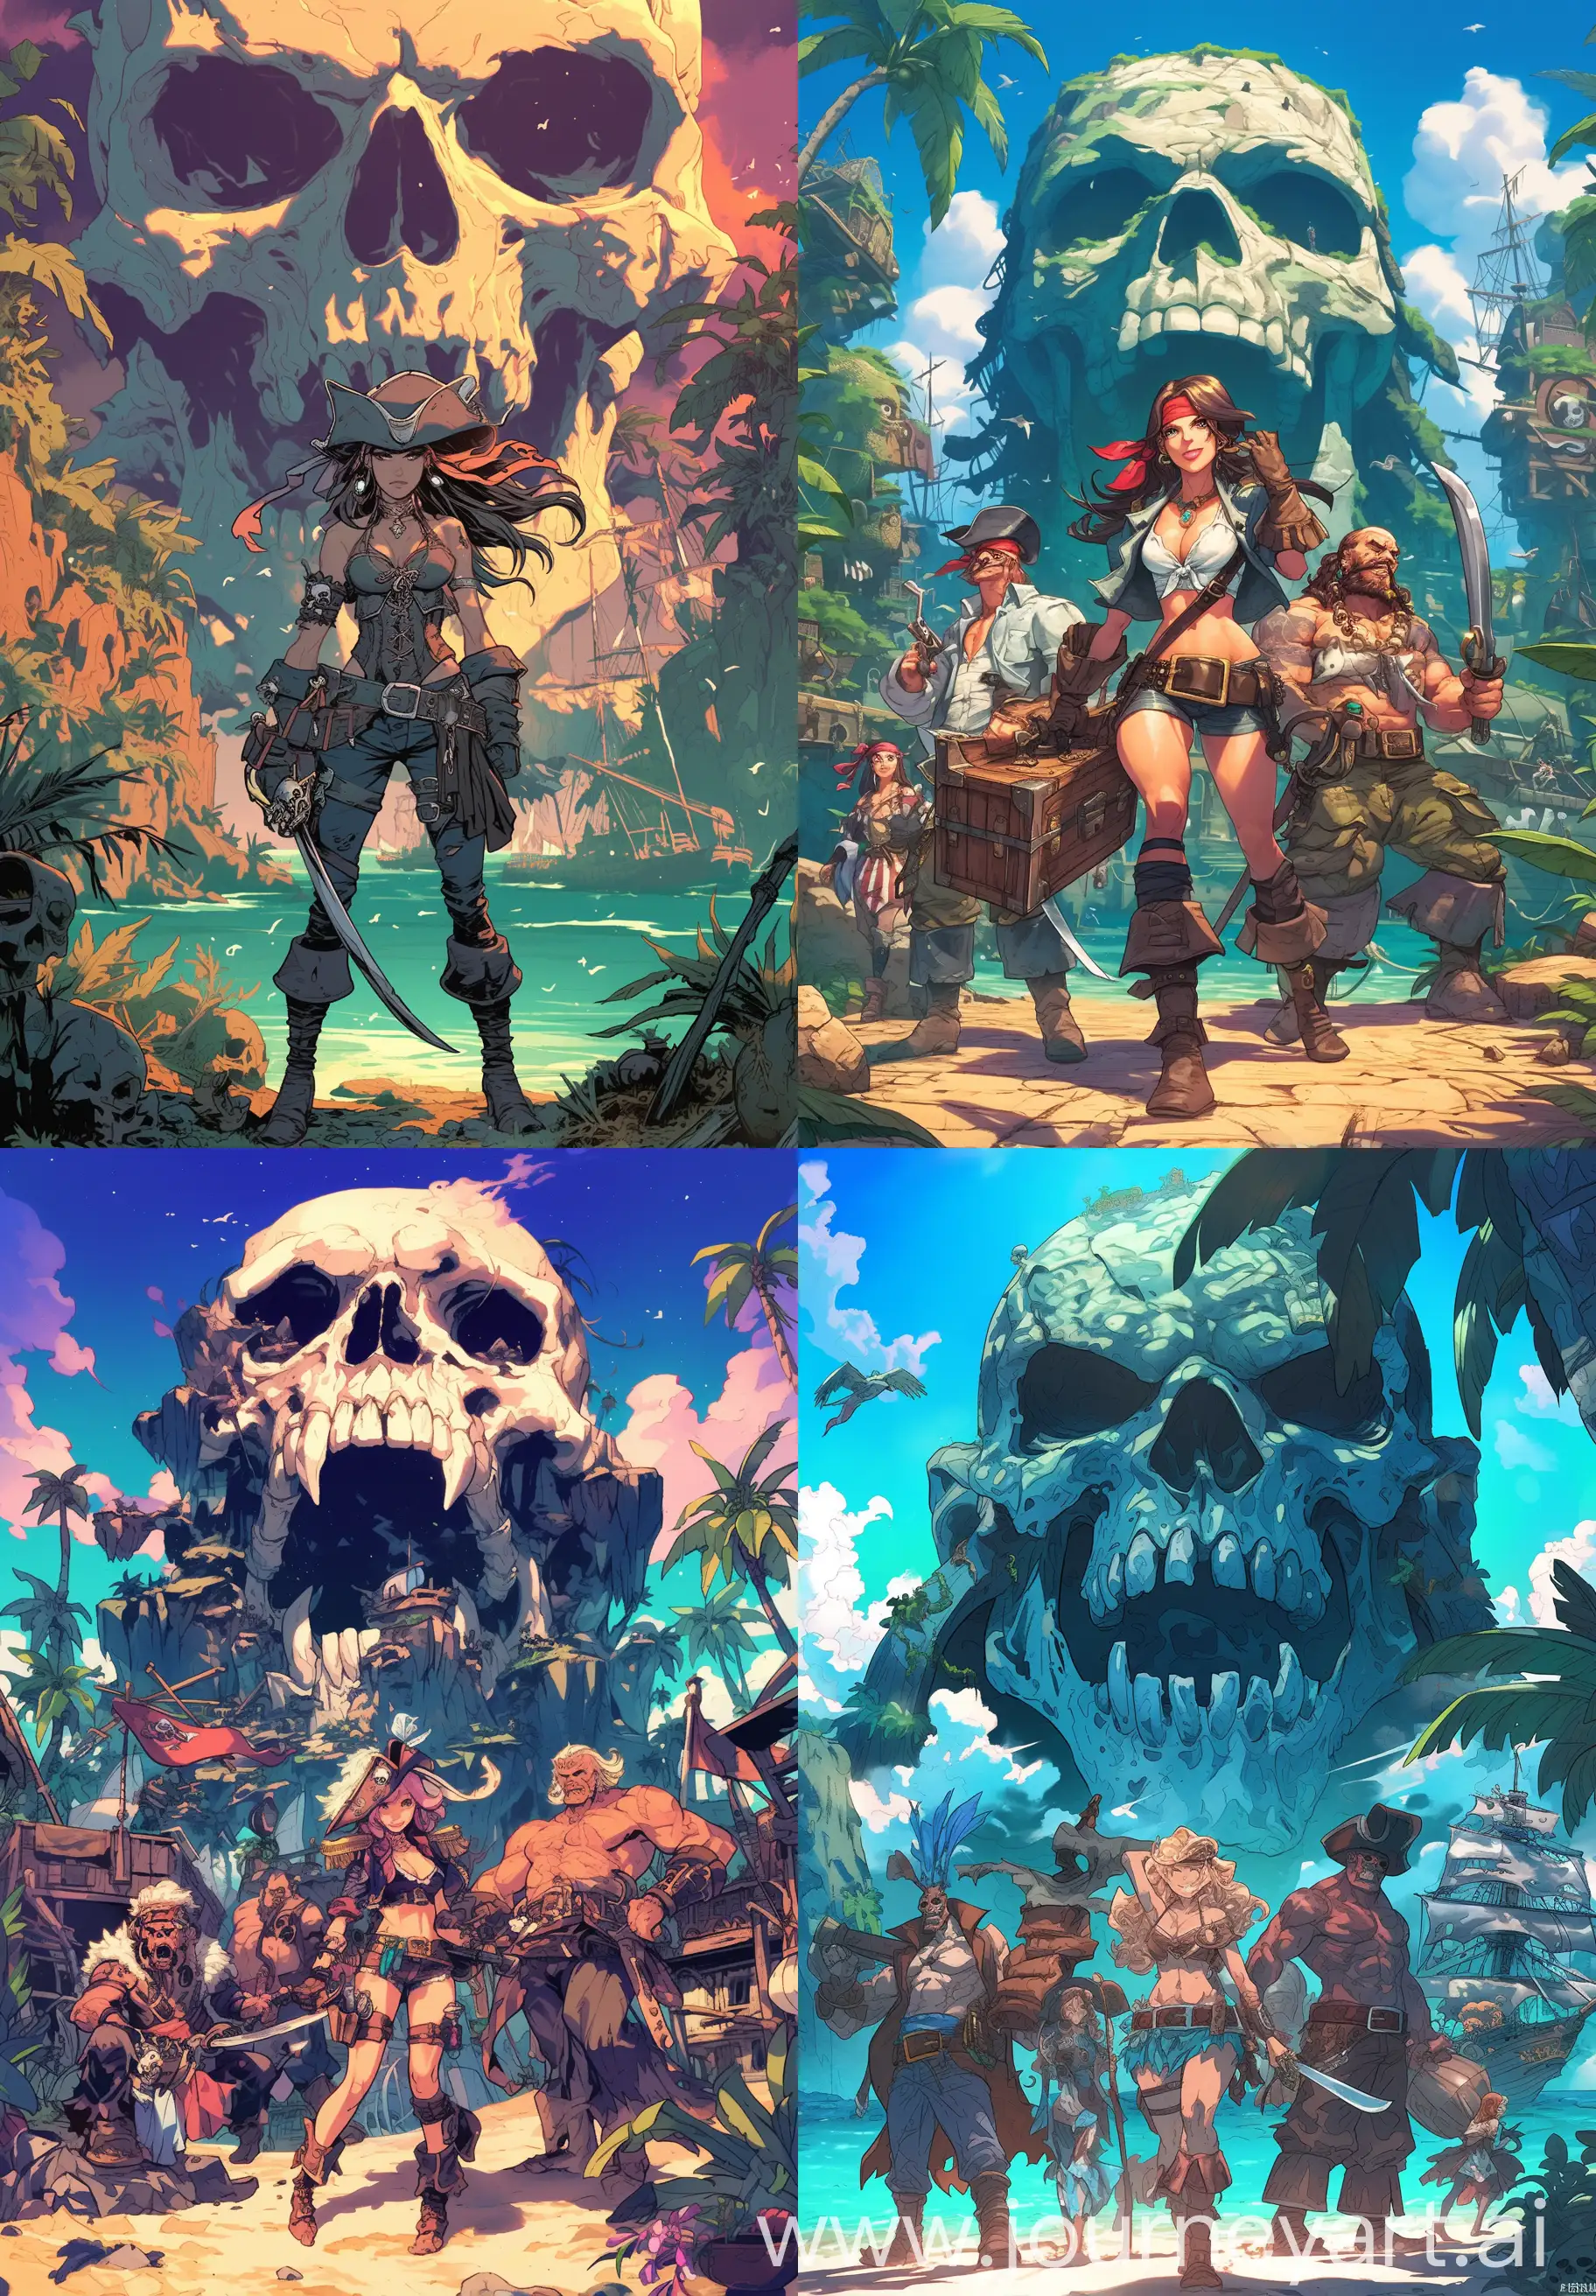 Adventurous-Female-Pirate-Captain-Leading-Gang-to-Skull-Island-for-Treasure-Hunt